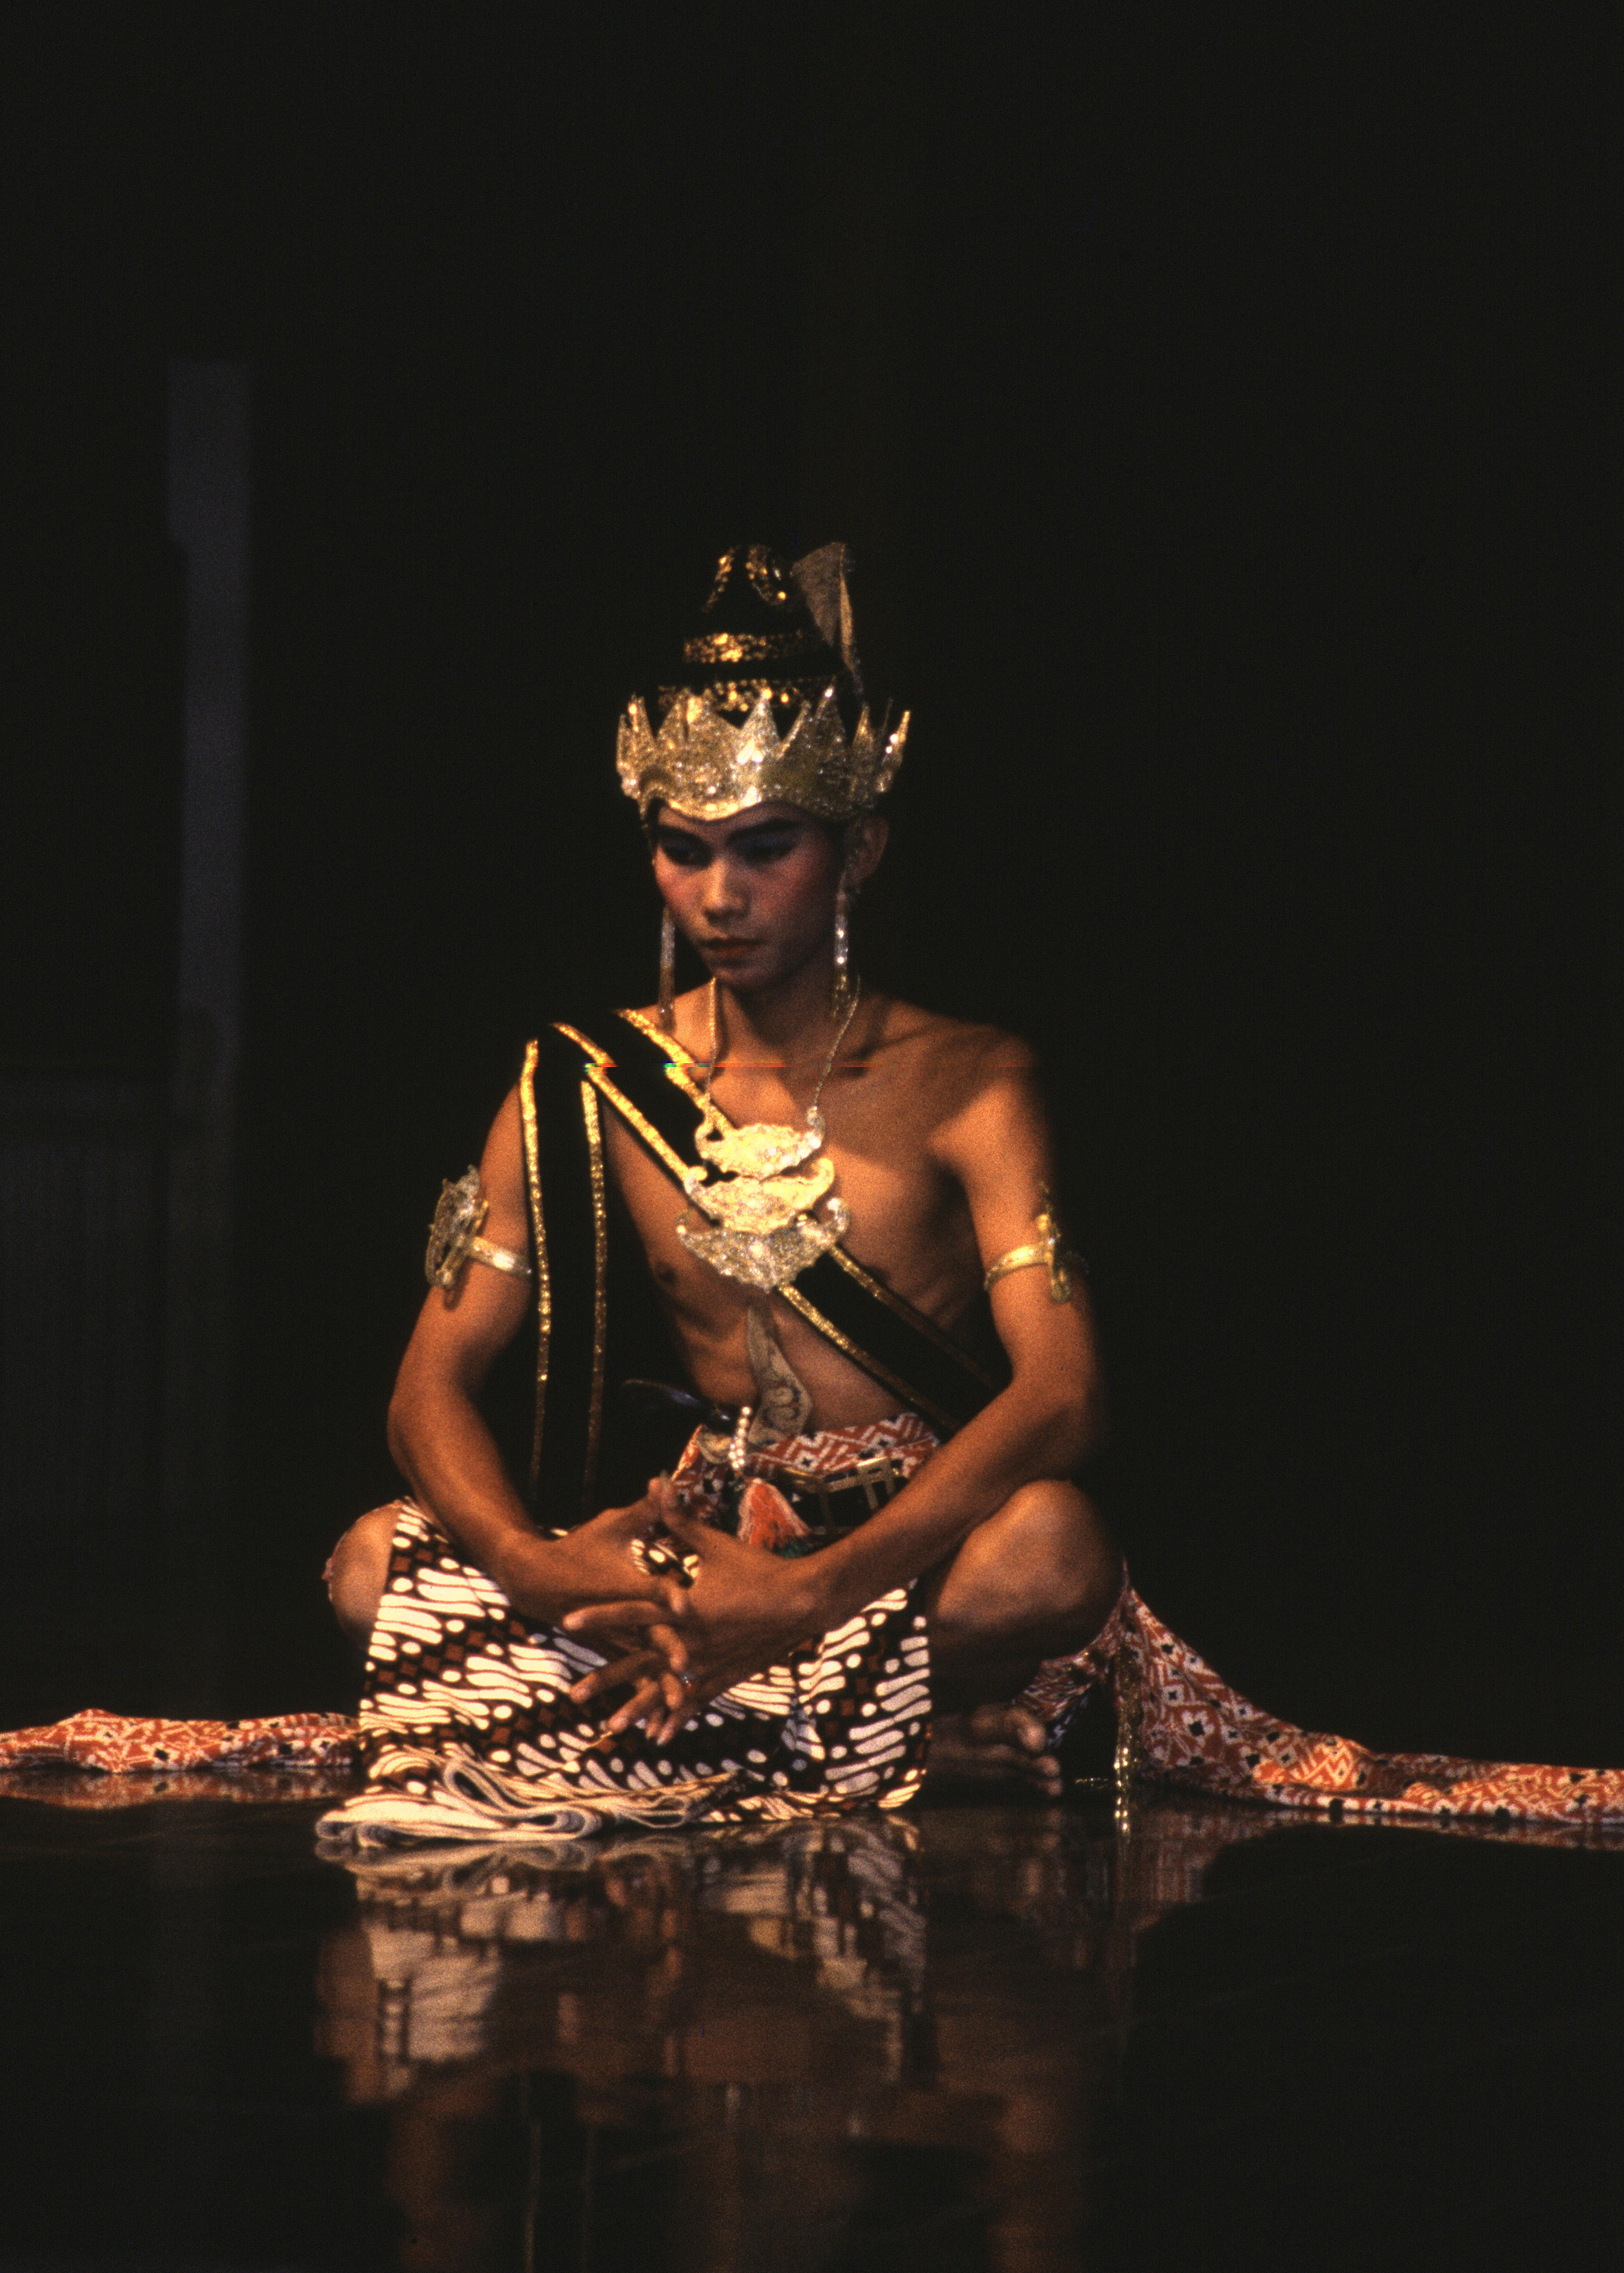  Danse  Yogyakarta Yogya Java  Indon sie Routard com